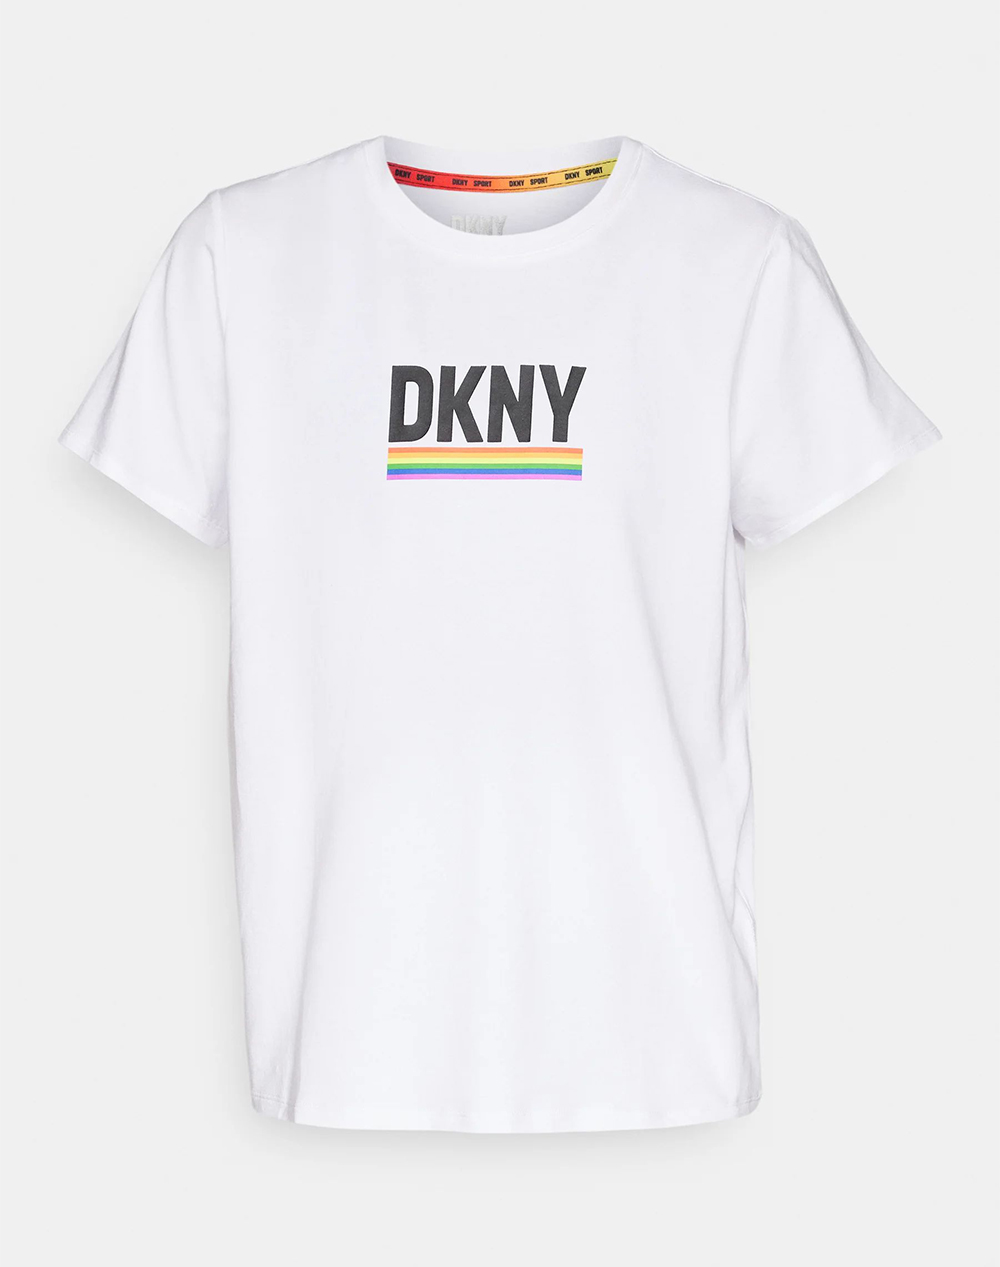 DKNY DP3T9659 LOGO ΜΠΛΟΥΖΑΚΙ ΚΟΝΤΟΜΑΝΙΚΟ DKNY DP3T9659-0091 White